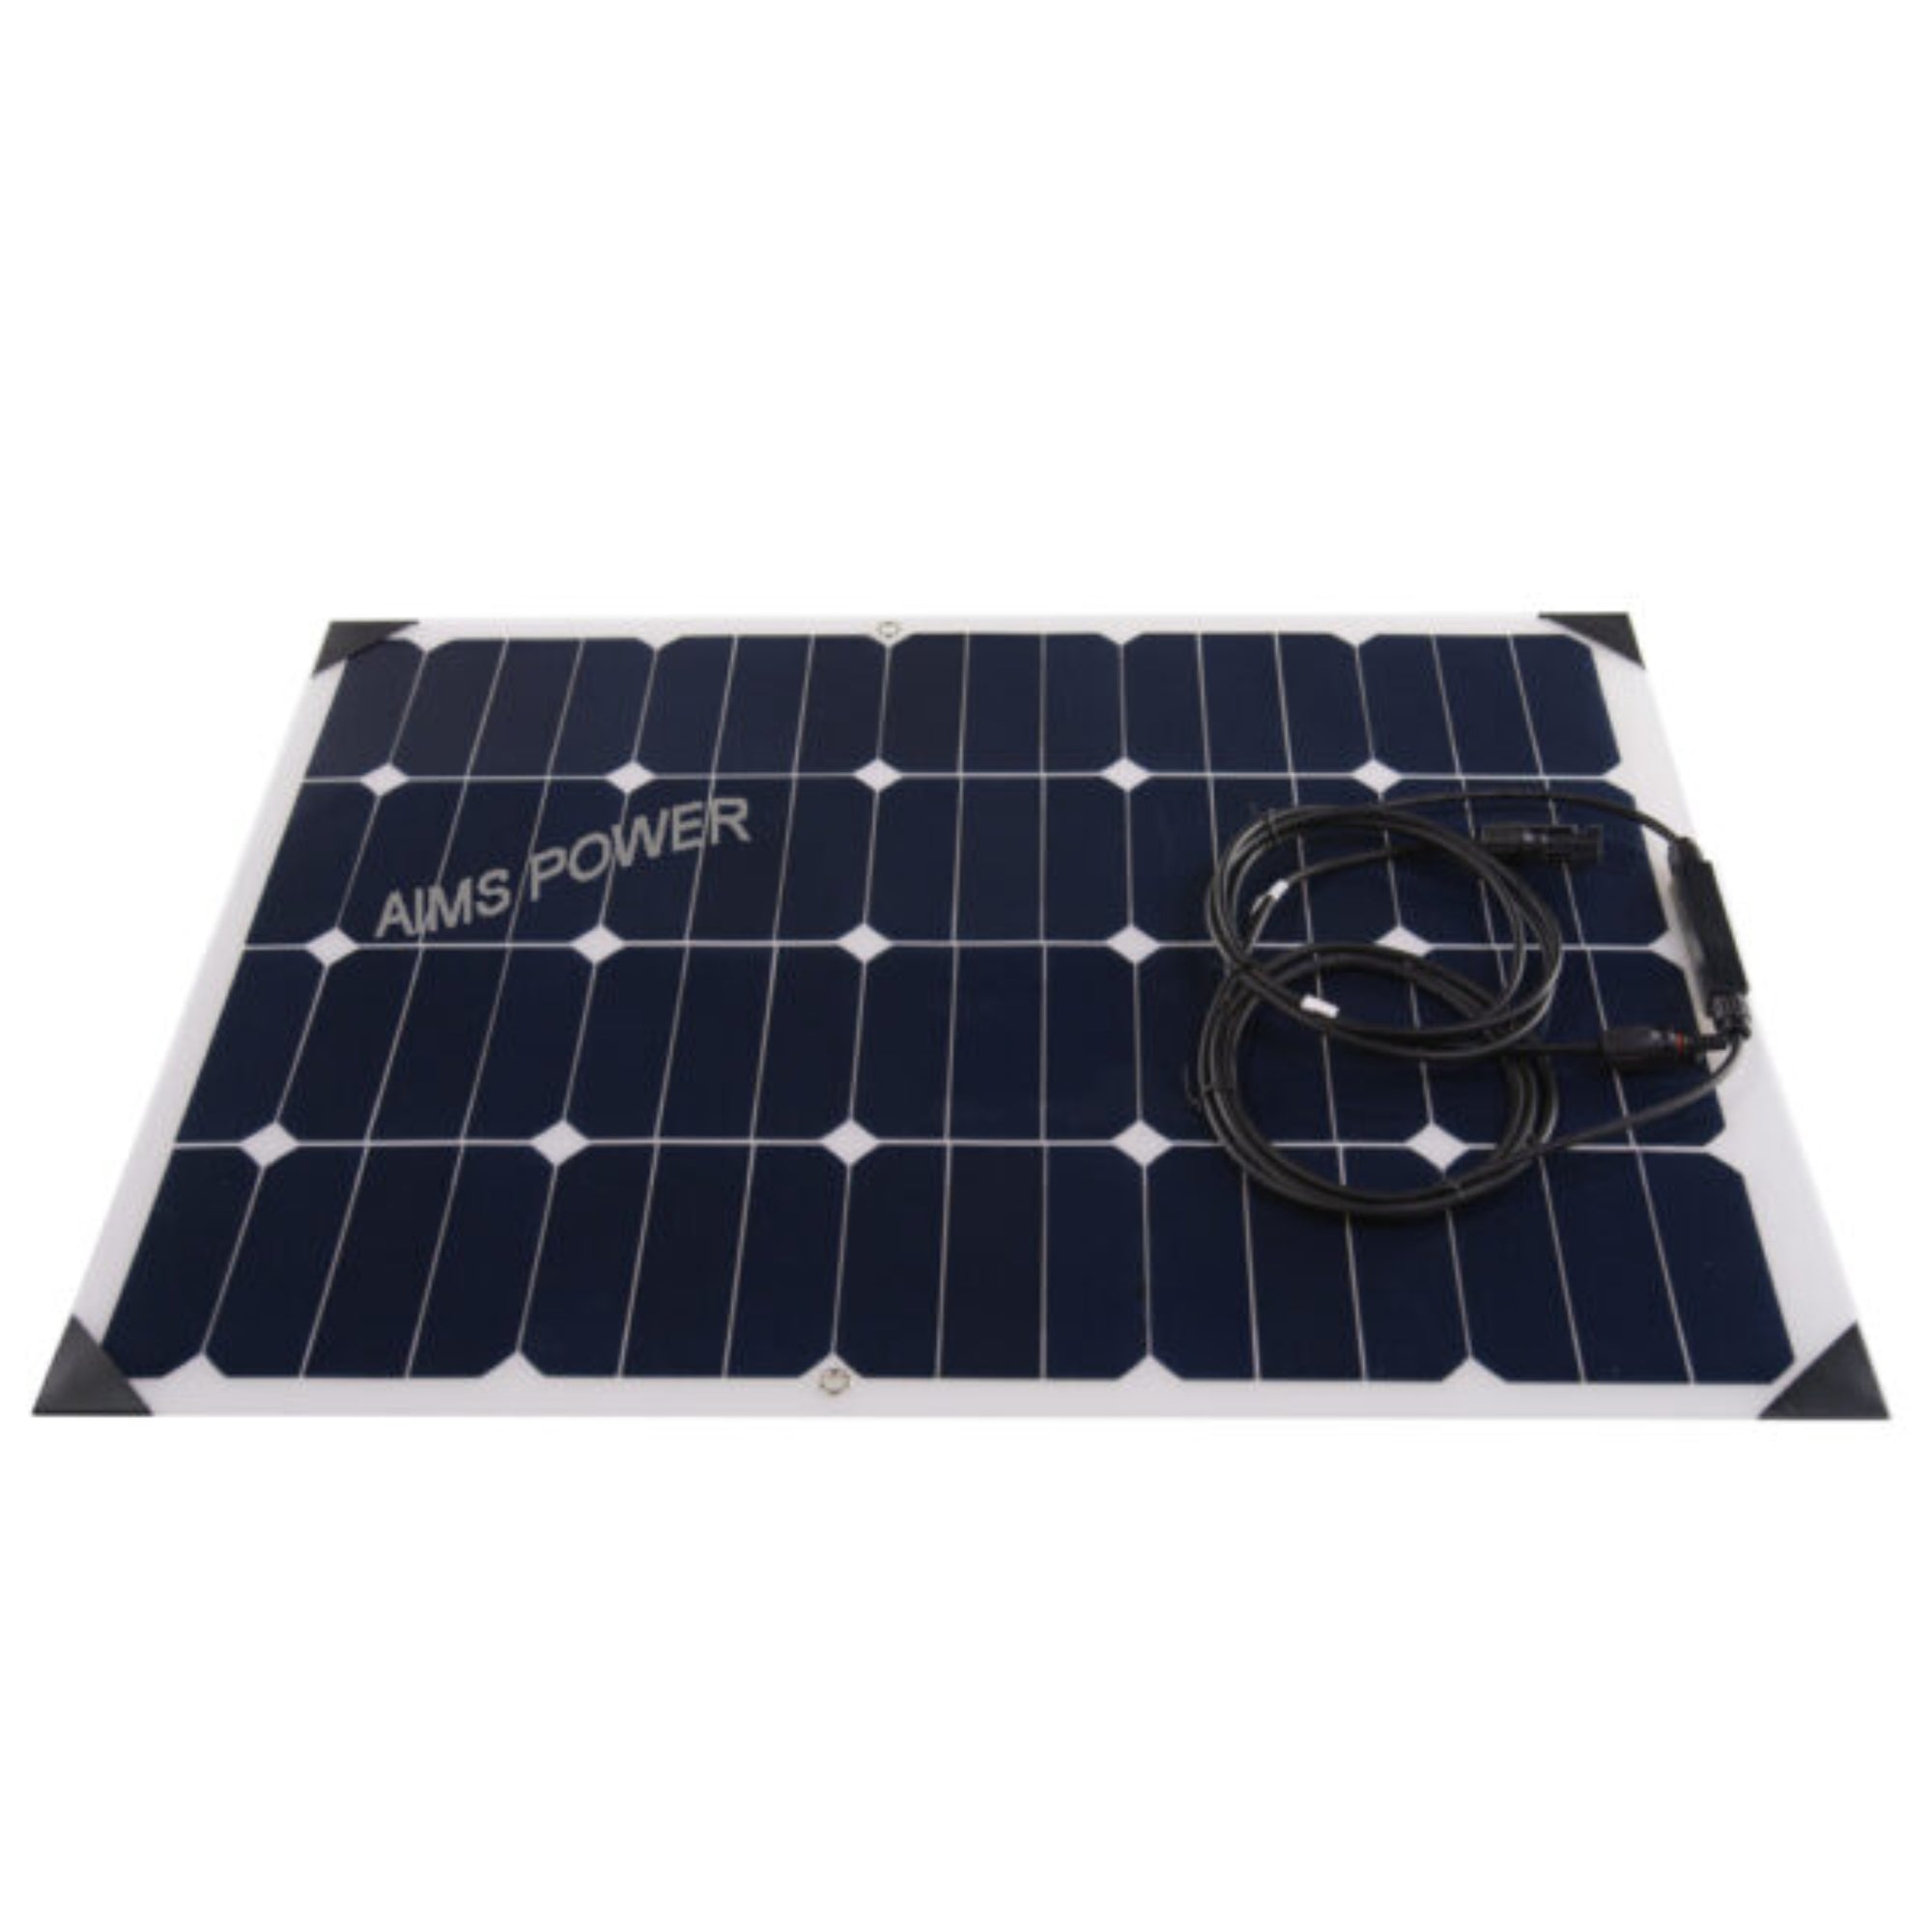 AIMS Power | 60 Watt Flexible Slim Monocrystalline Solar Panel